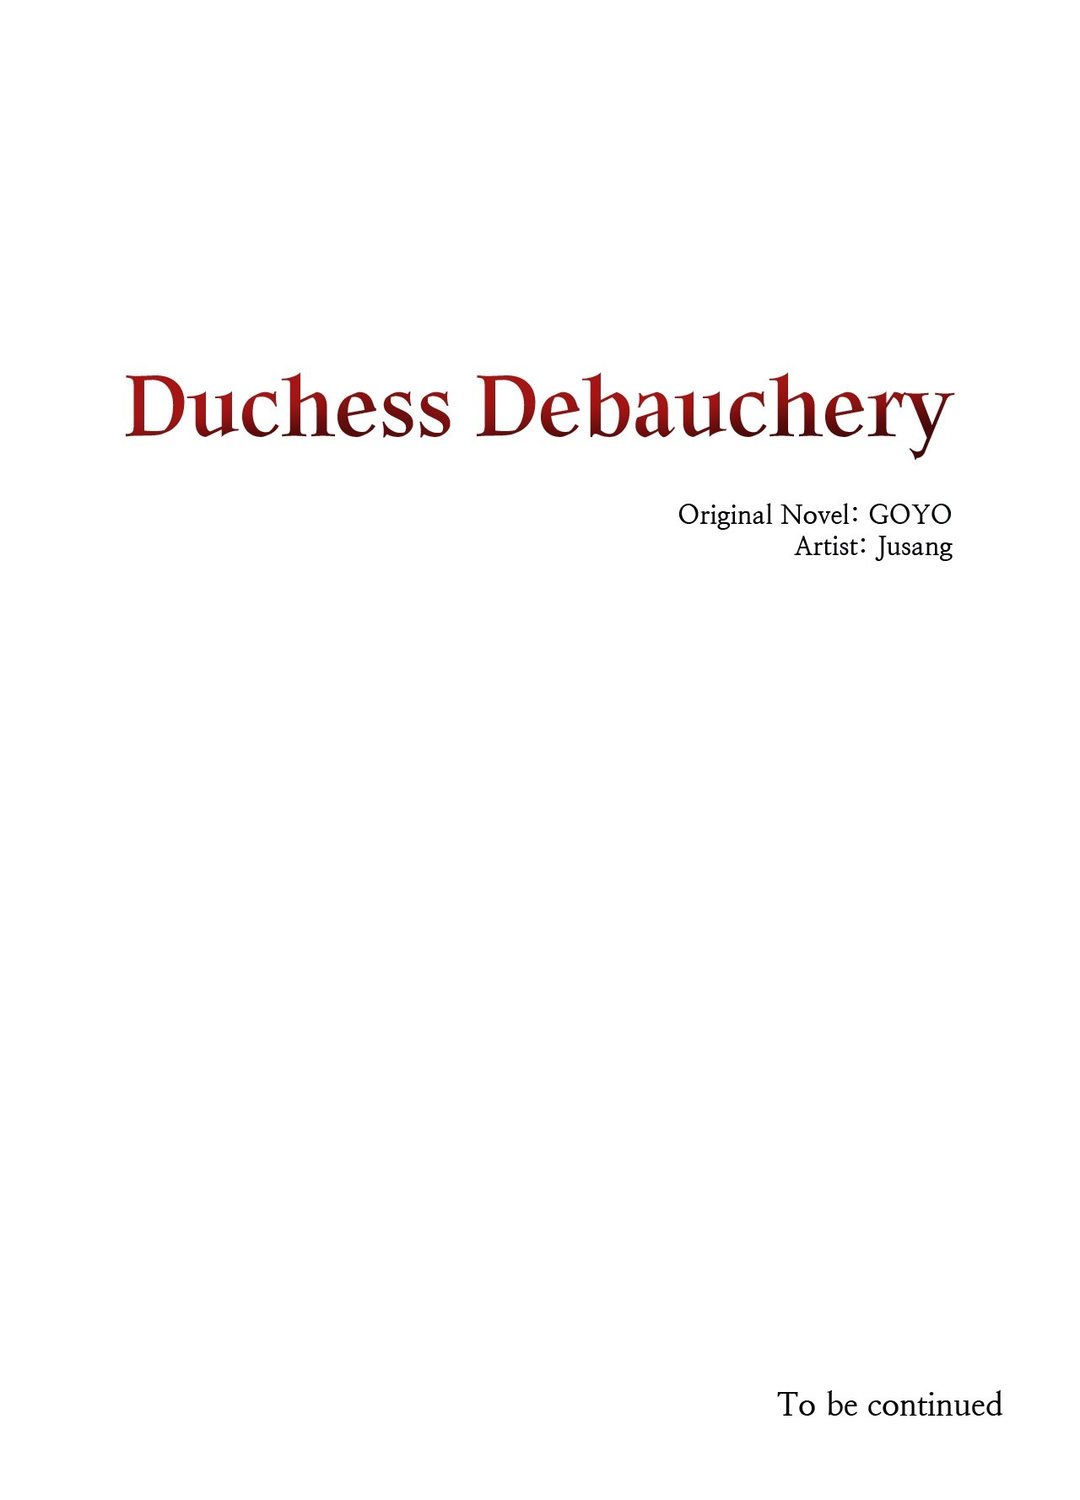 the-duchess-lewd-invitation-chap-29-30